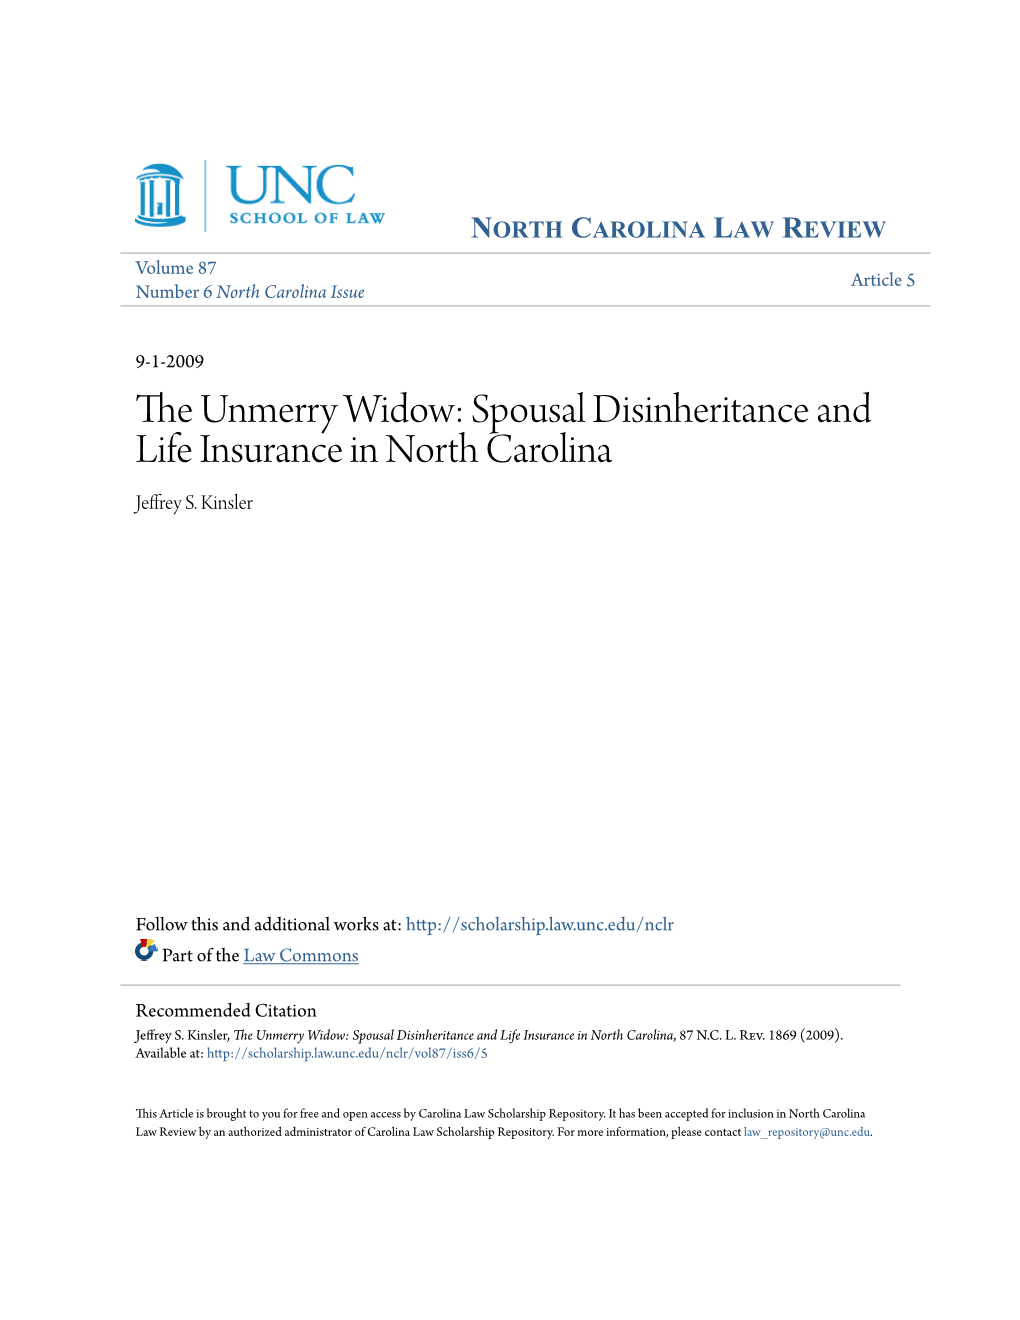 Spousal Disinheritance and Life Insurance in North Carolina Jeffrey S